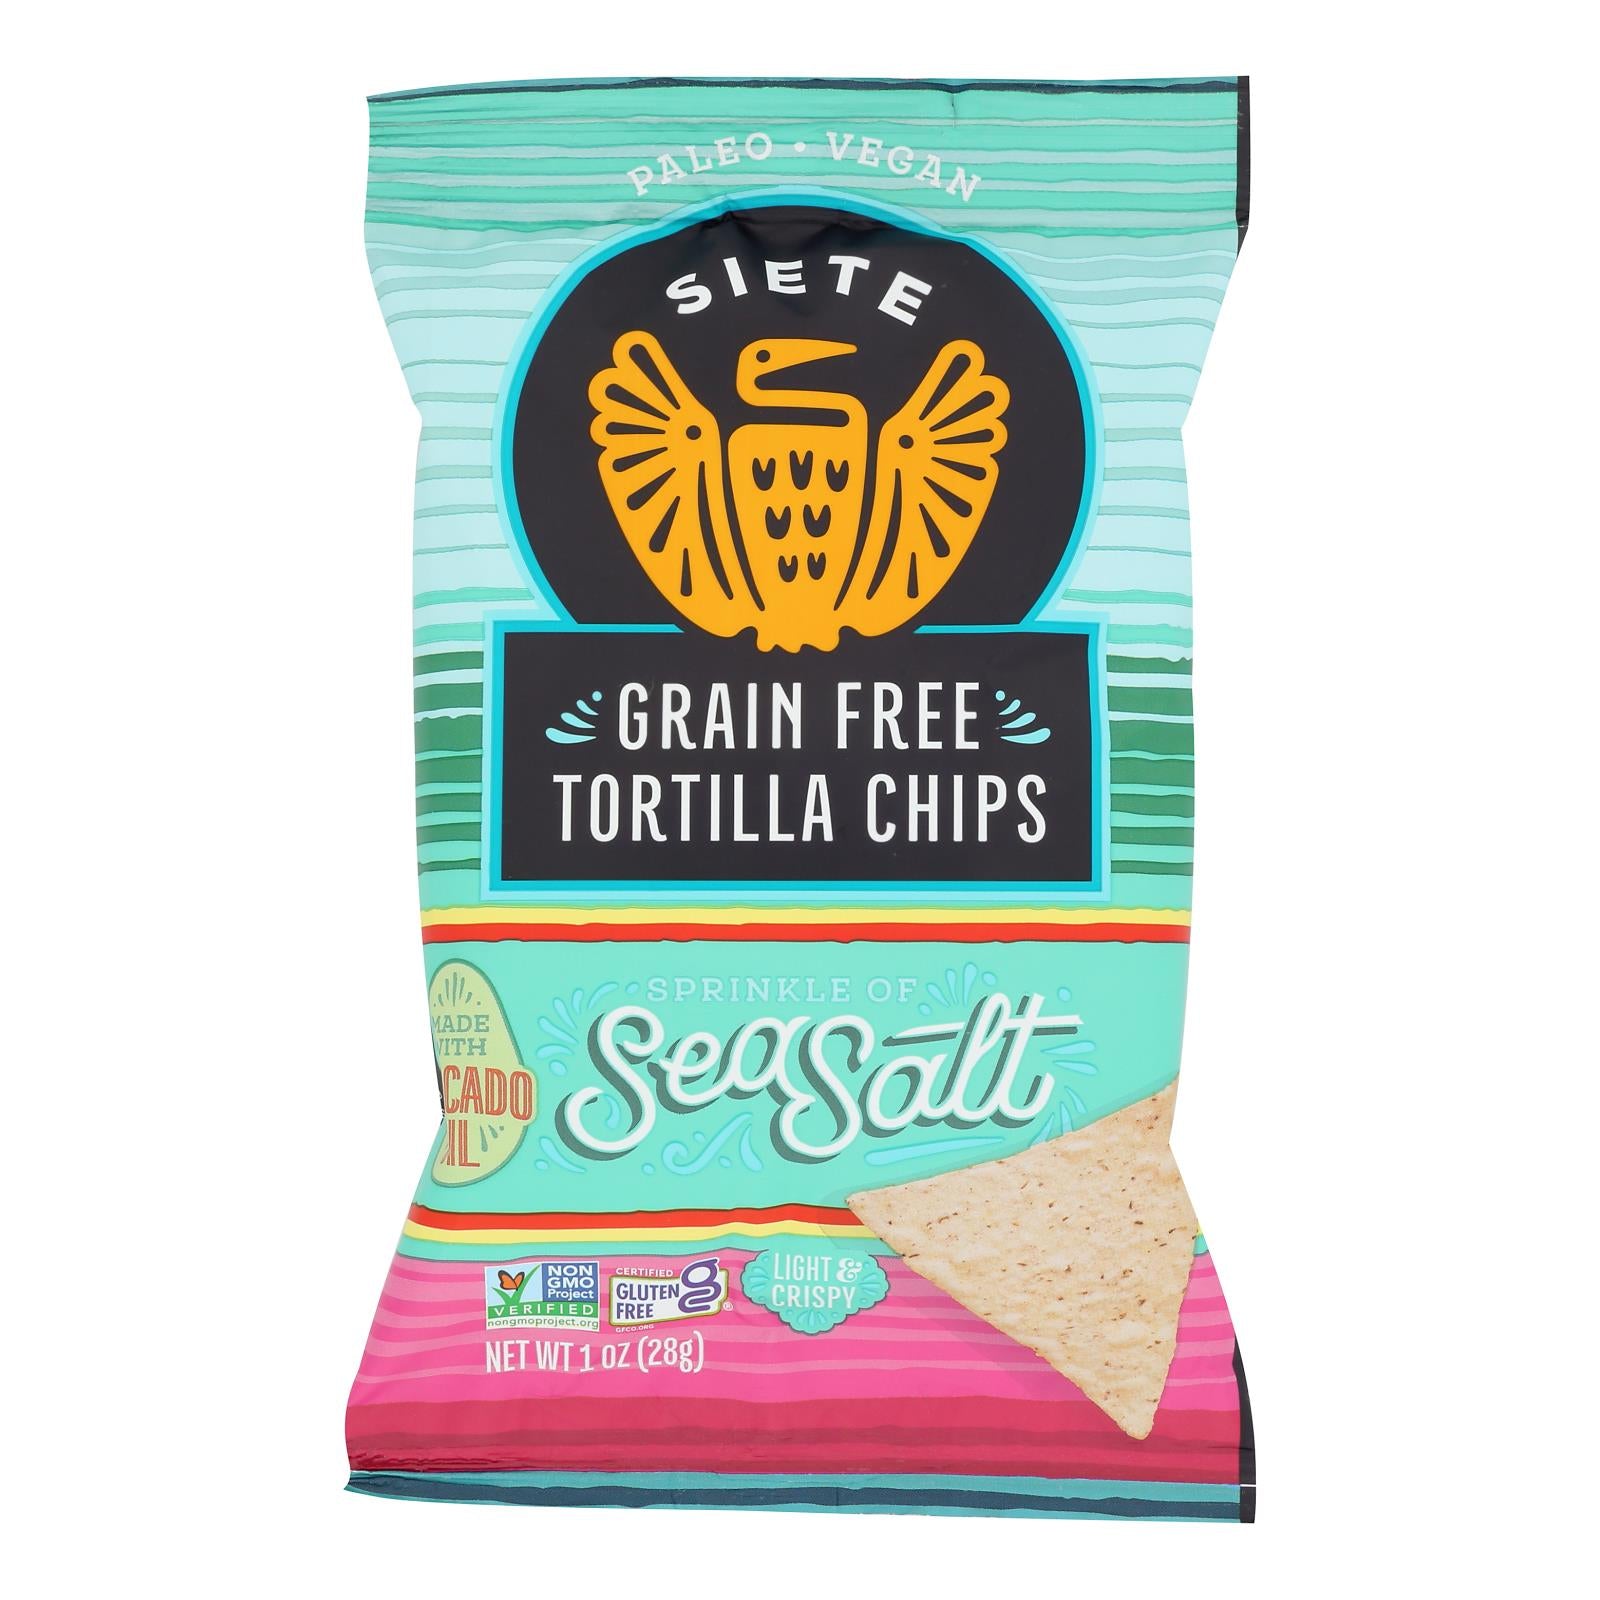 Siete - Tort Chip Sea Salt Green Free - Case Of 24 - 1 Oz